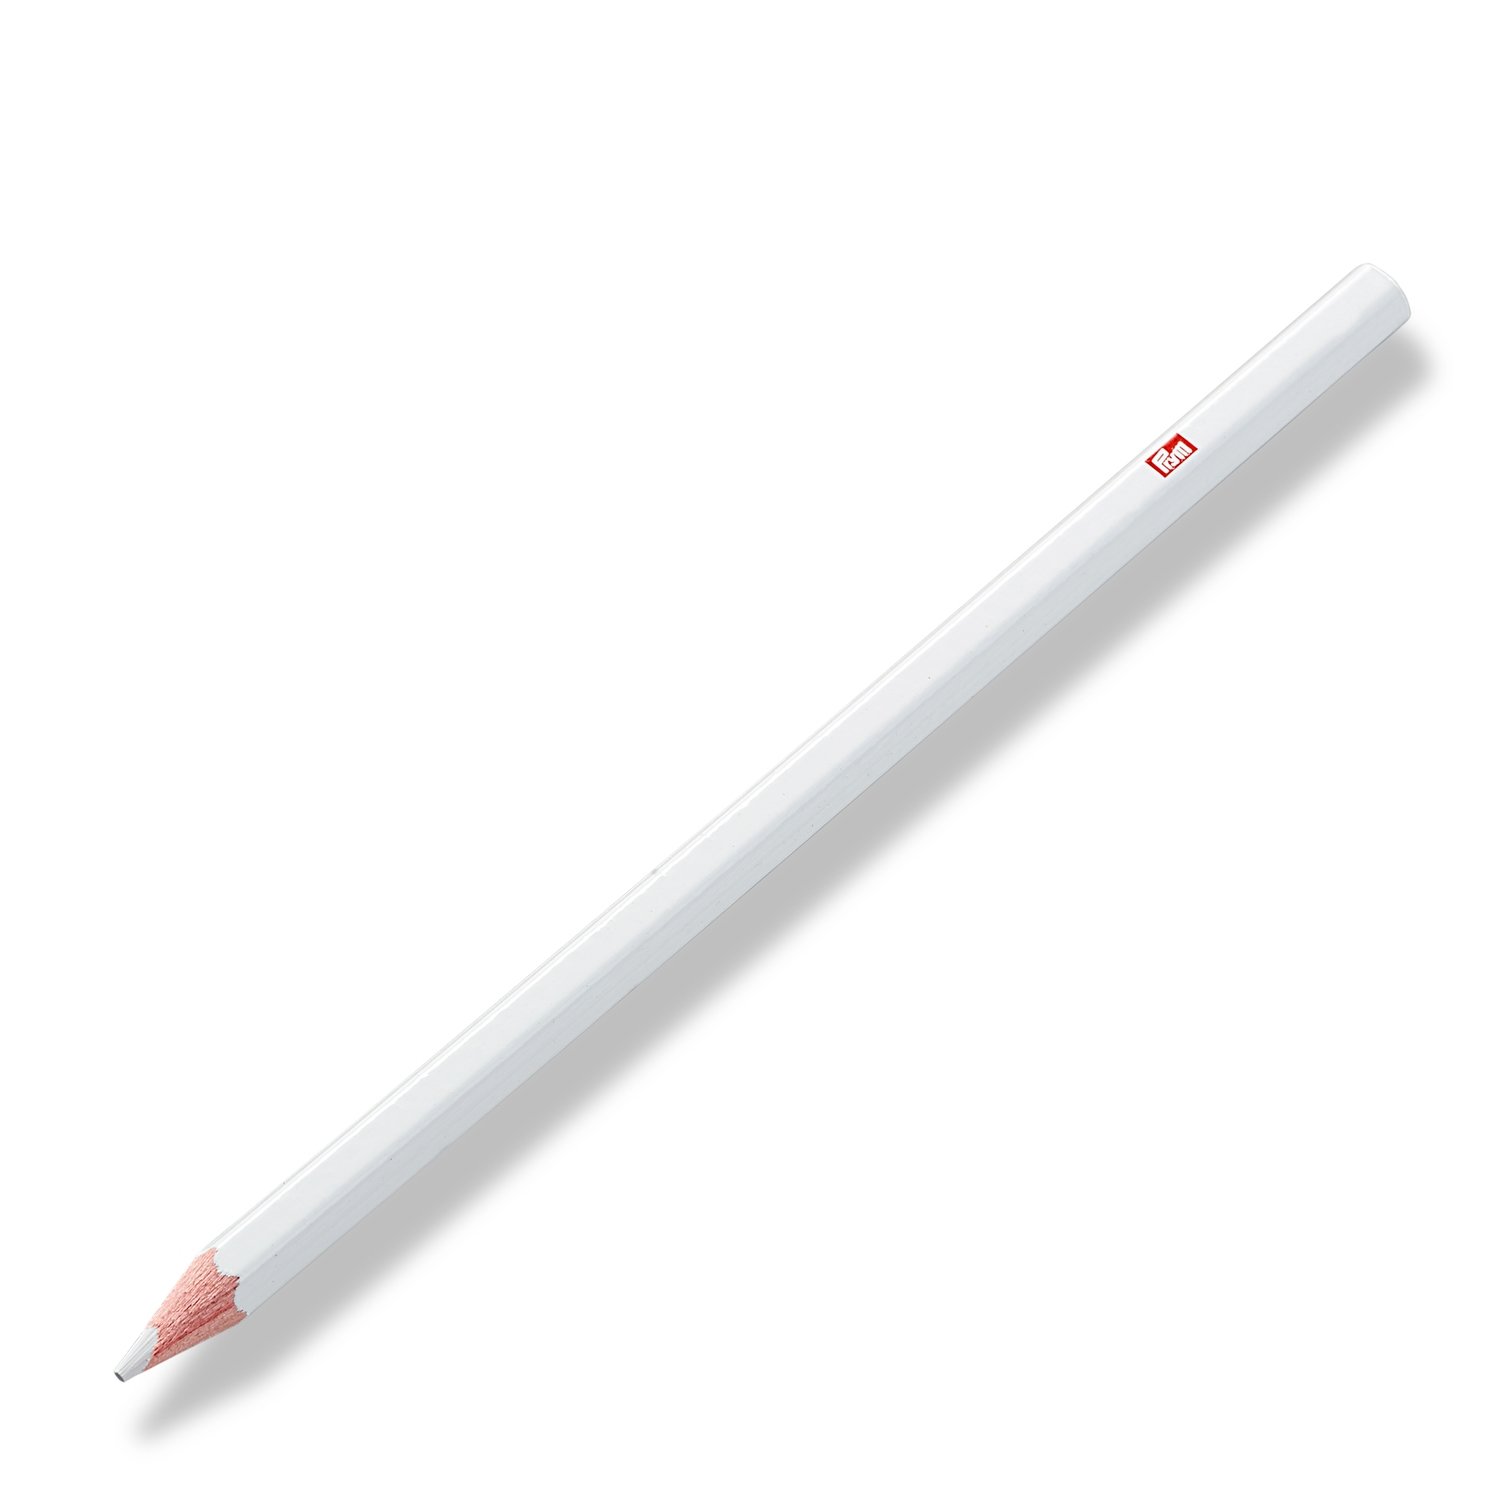 Marker pen, water-erasable, white